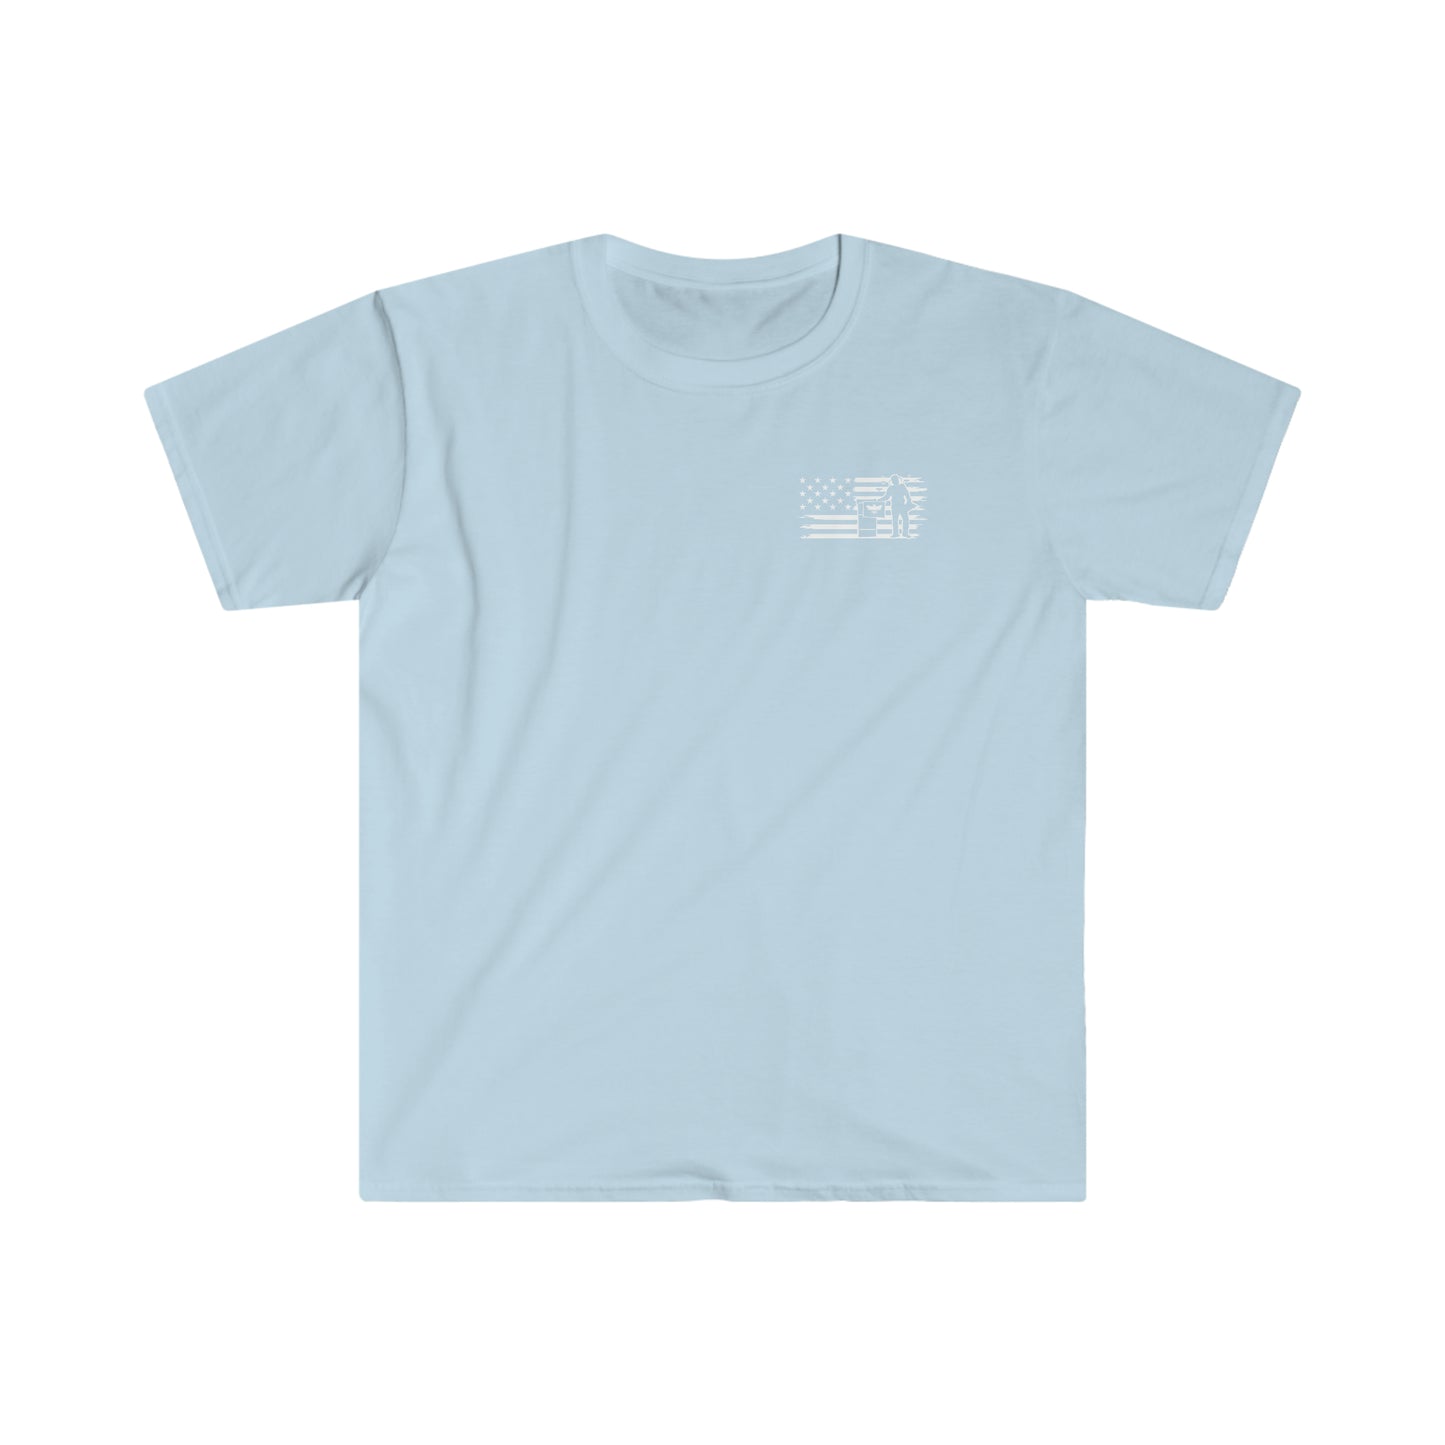 American Beekeeper Unisex Softstyle T-Shirt